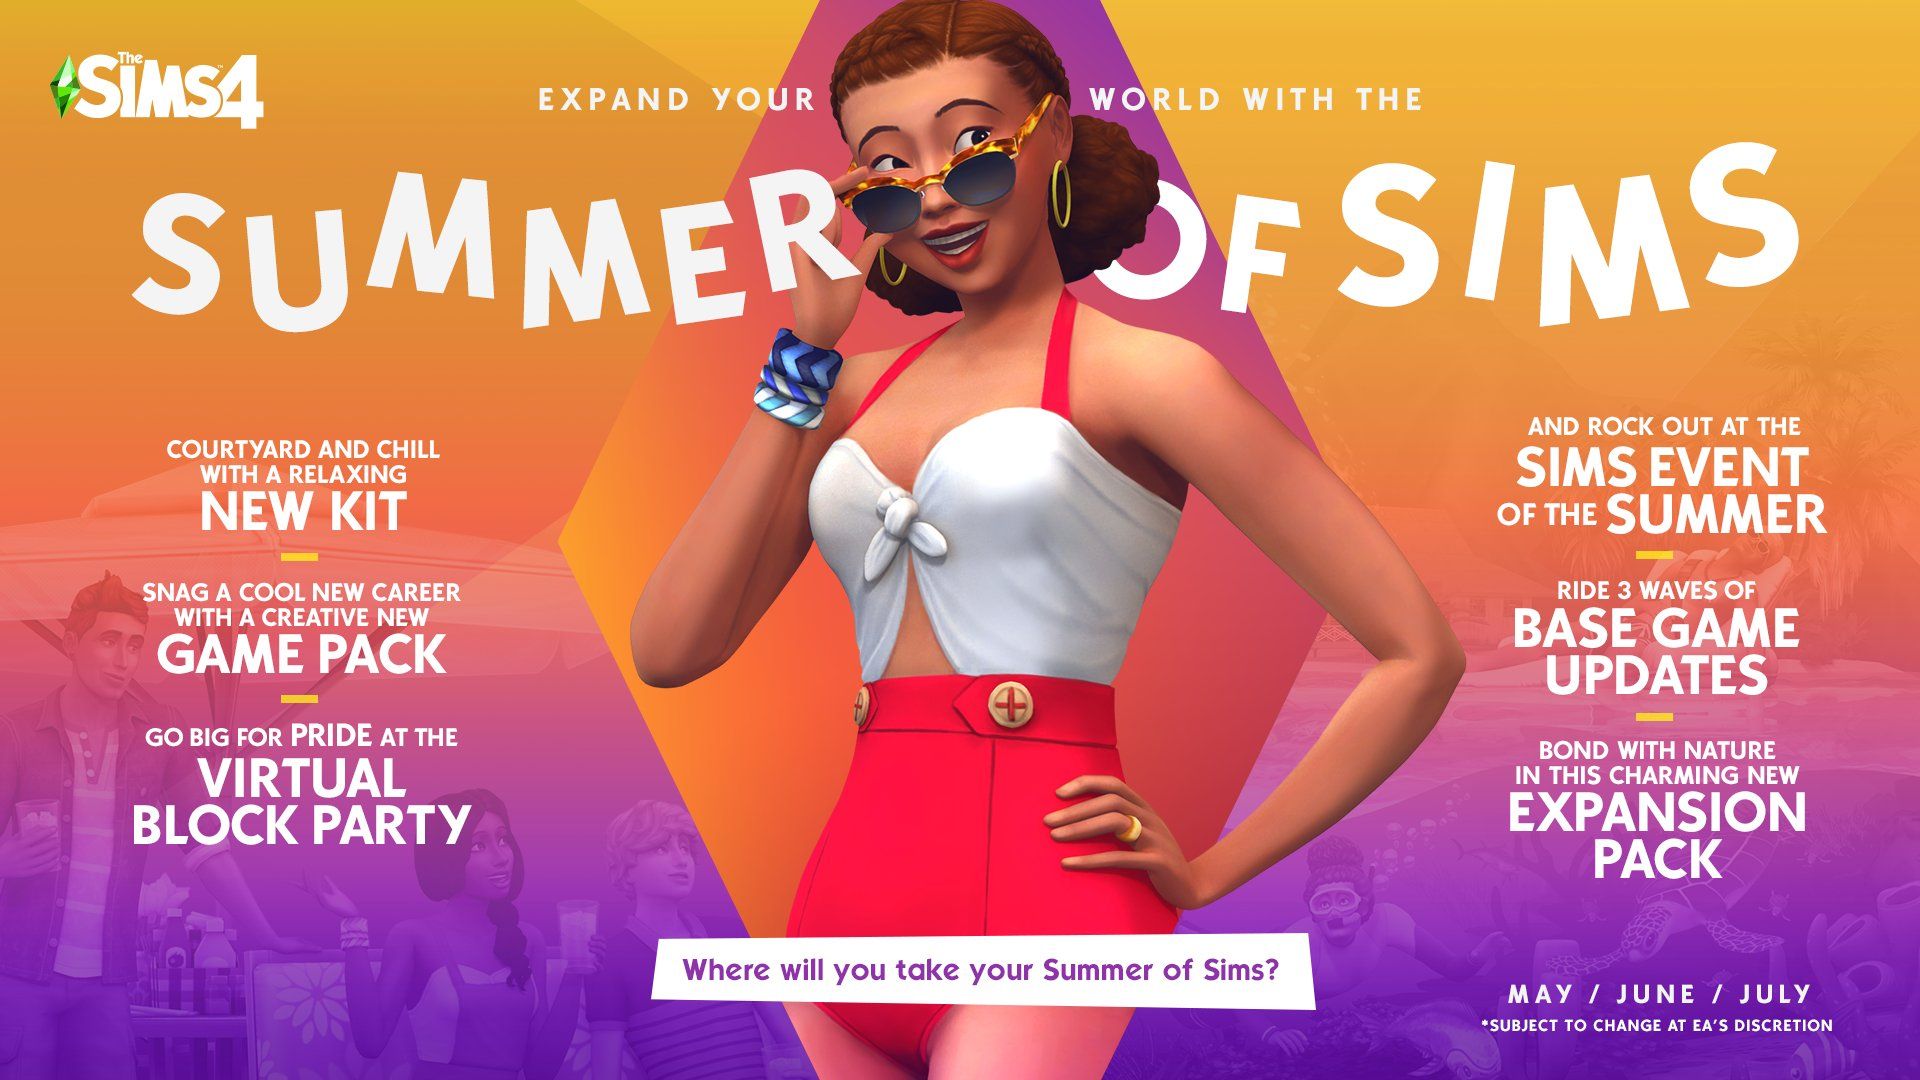 Sims 4 summer of sims roqadmap